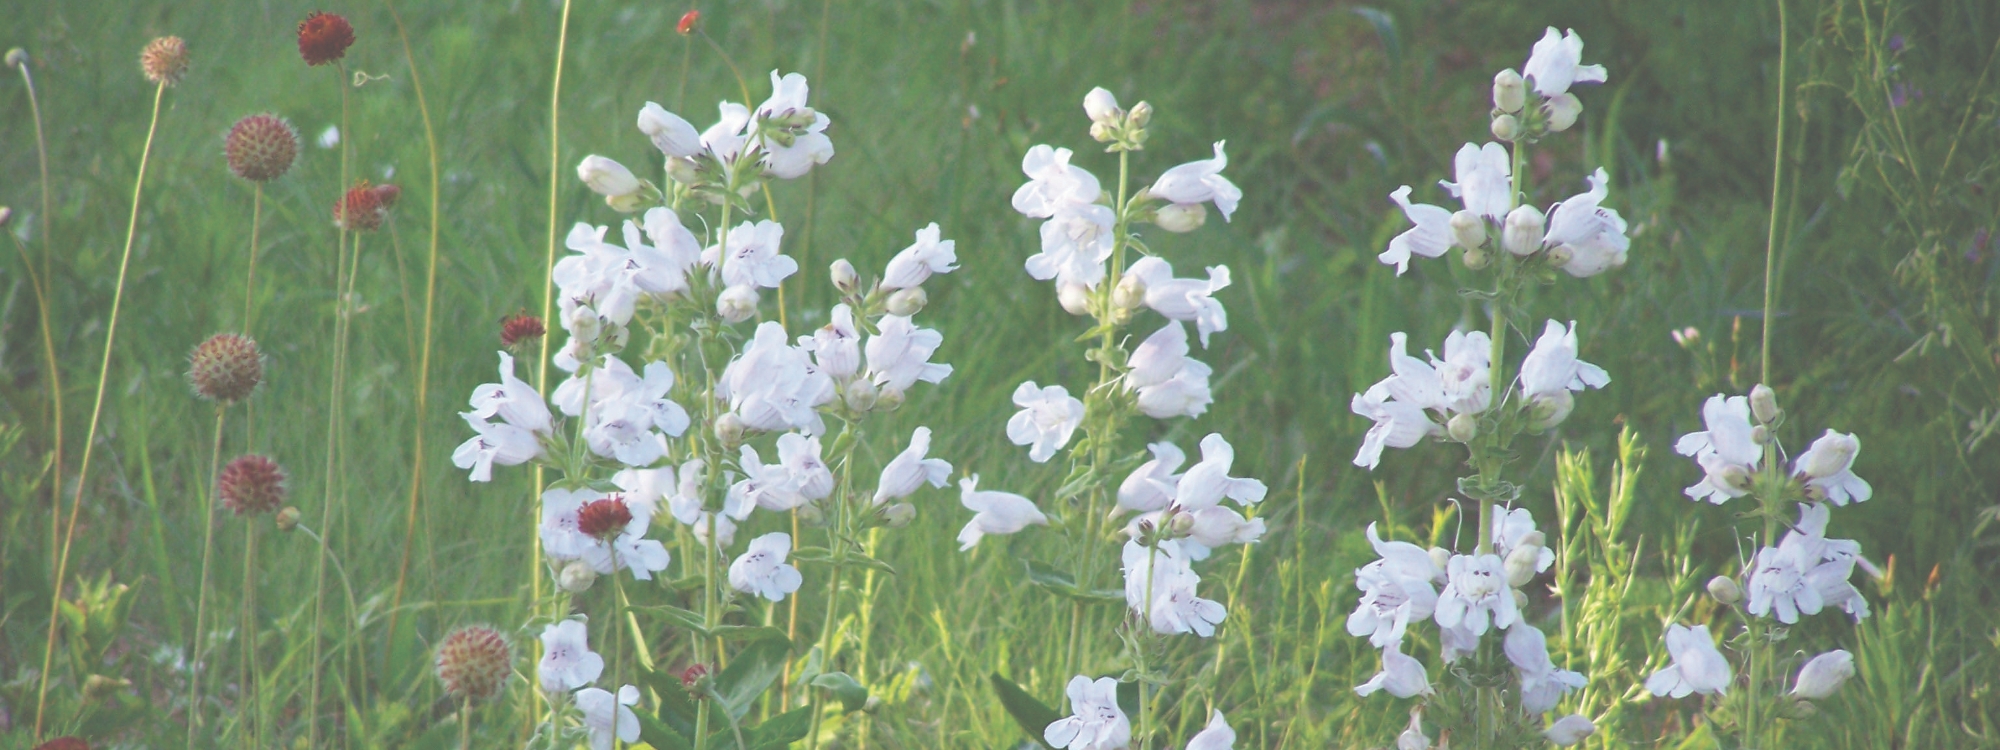 Penstemon flowers in meadow